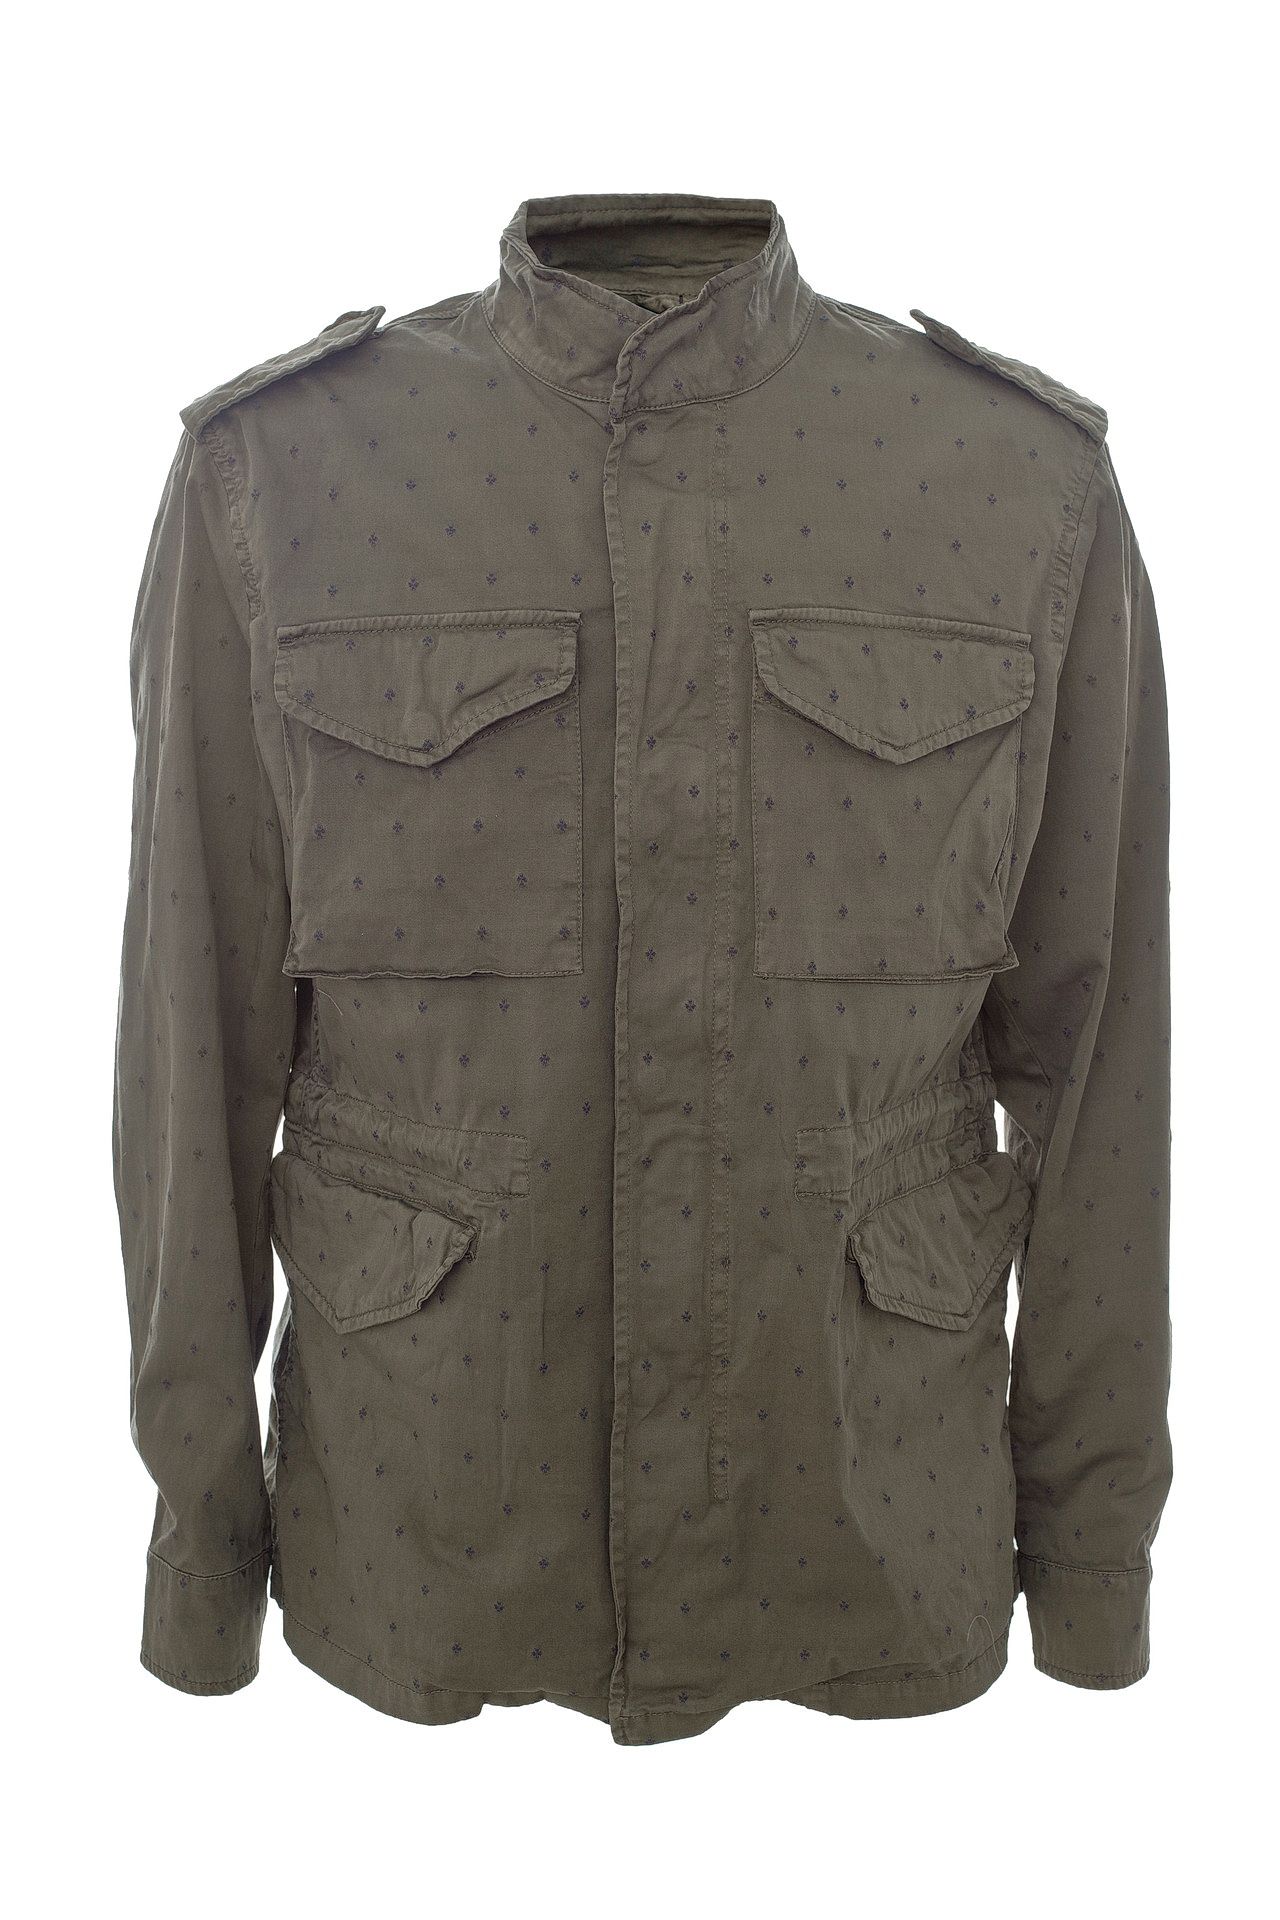 Одежда мужская Куртка GIANNI LUPO (GL093R/18.1). Купить за 11500 руб.